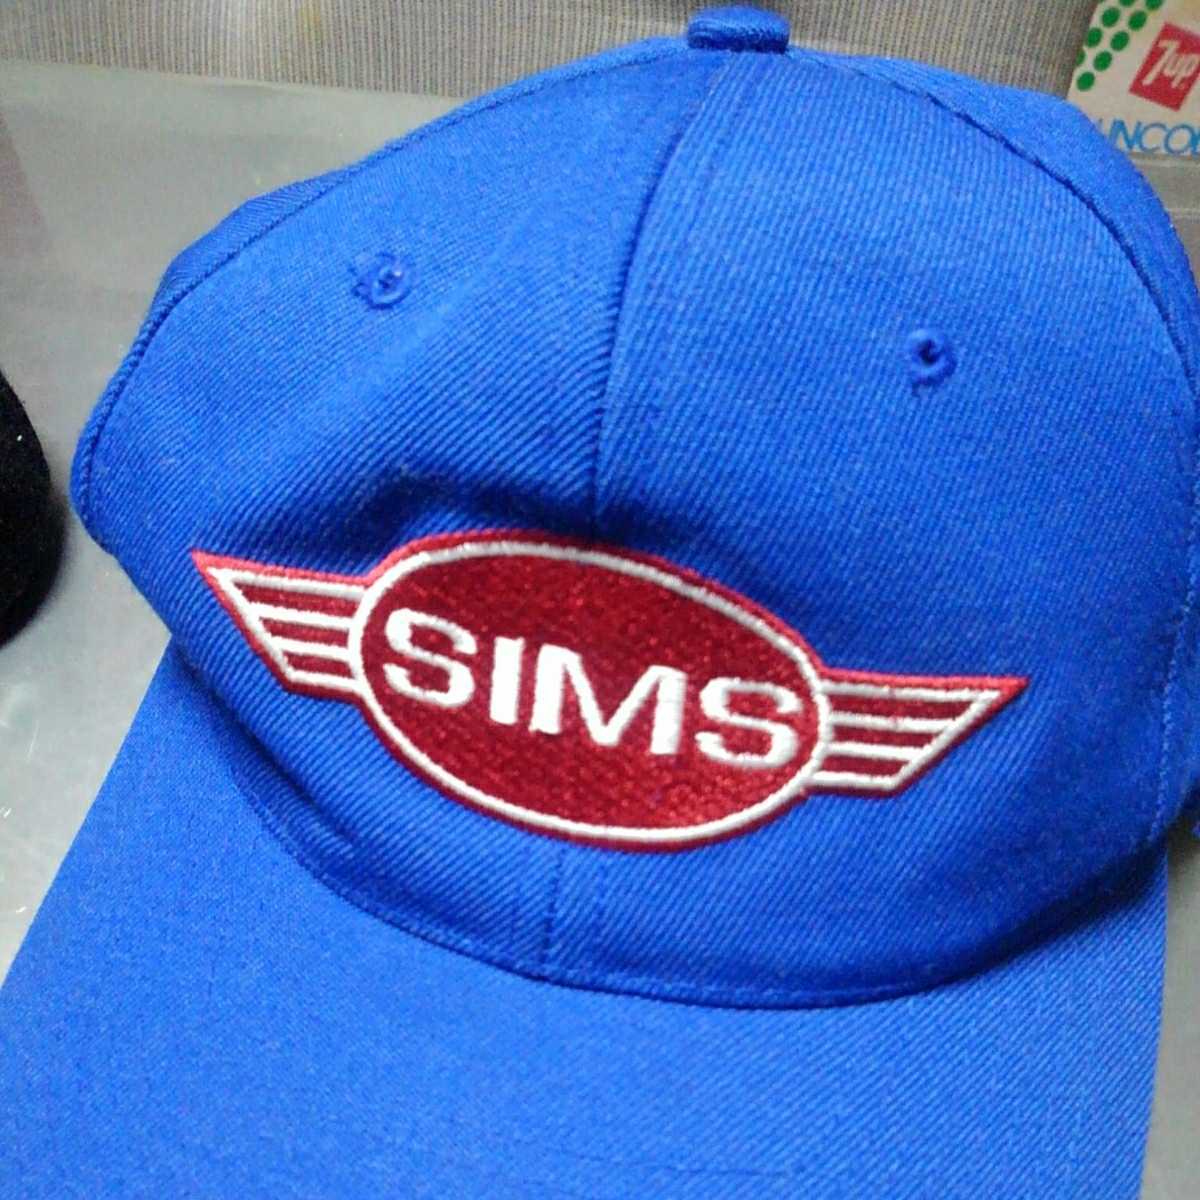  Old school Syms SIMS колпак ske-ta- скейтборд Vintage Classics kebo- старый Logo вышивка шляпа retro 